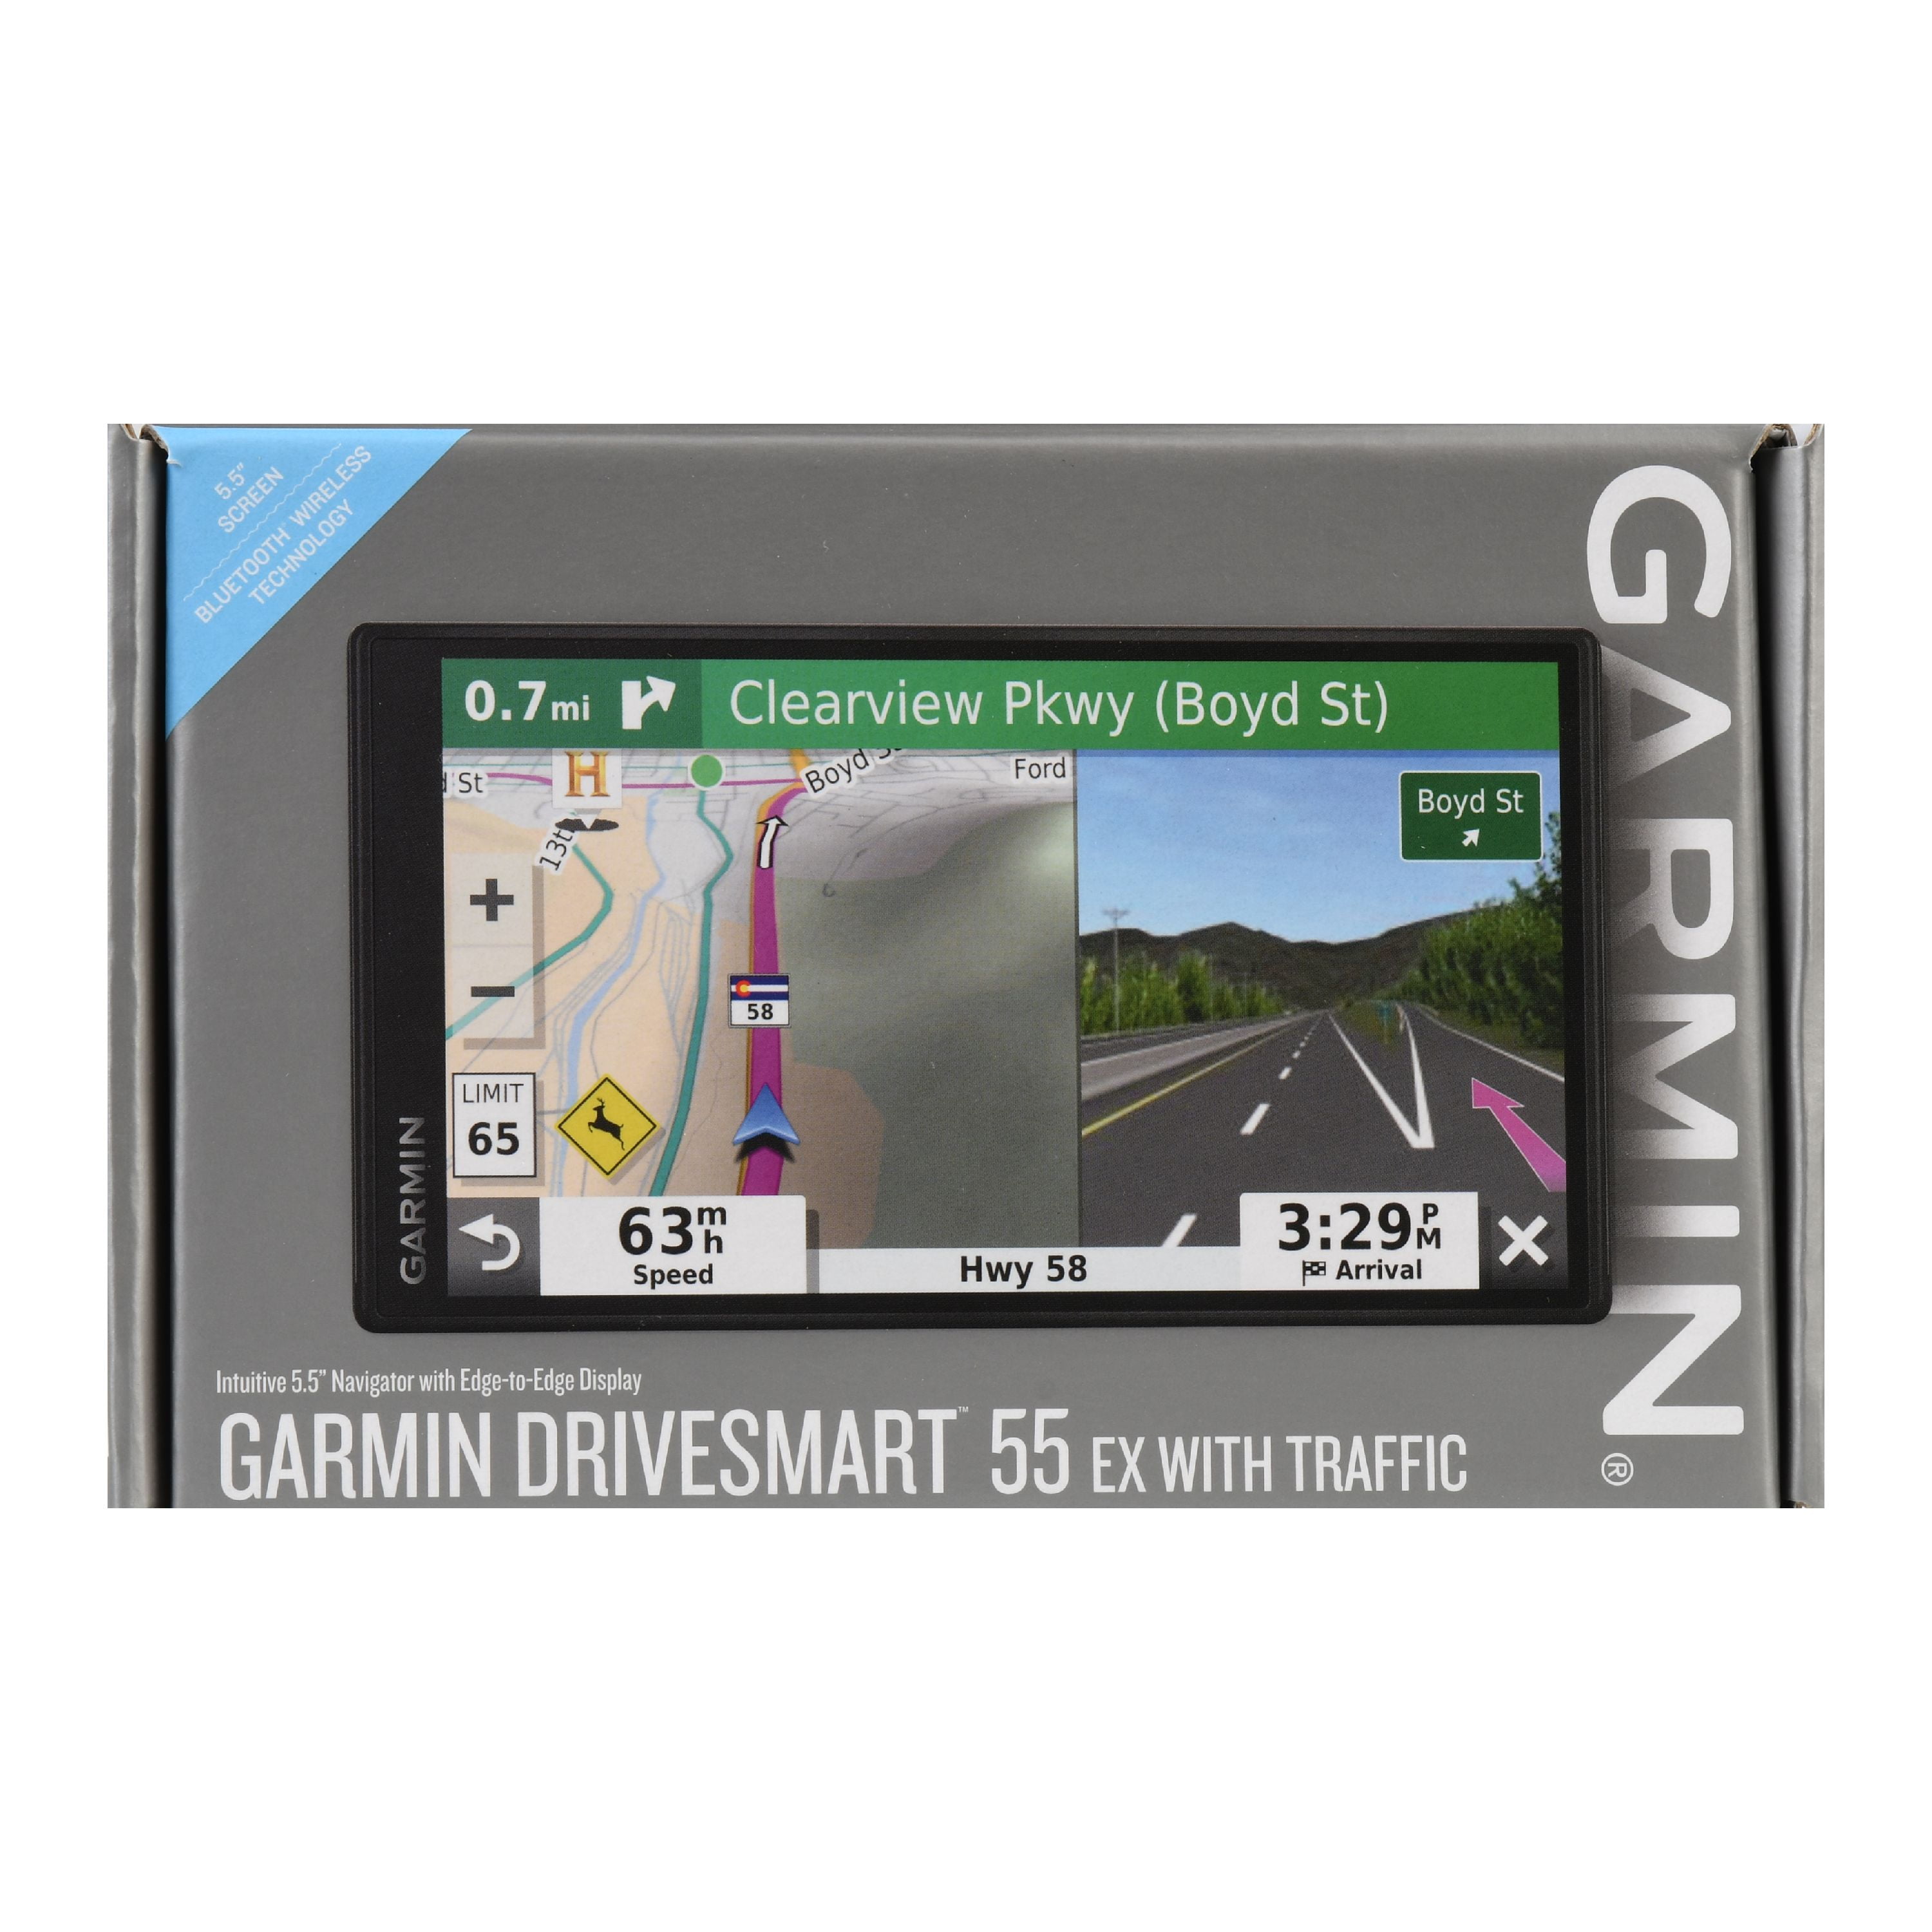 faillissement tumor Ontleden Garmin DriveSmart 55 with traffic EX GPS (Latest Model) - Walmart.com